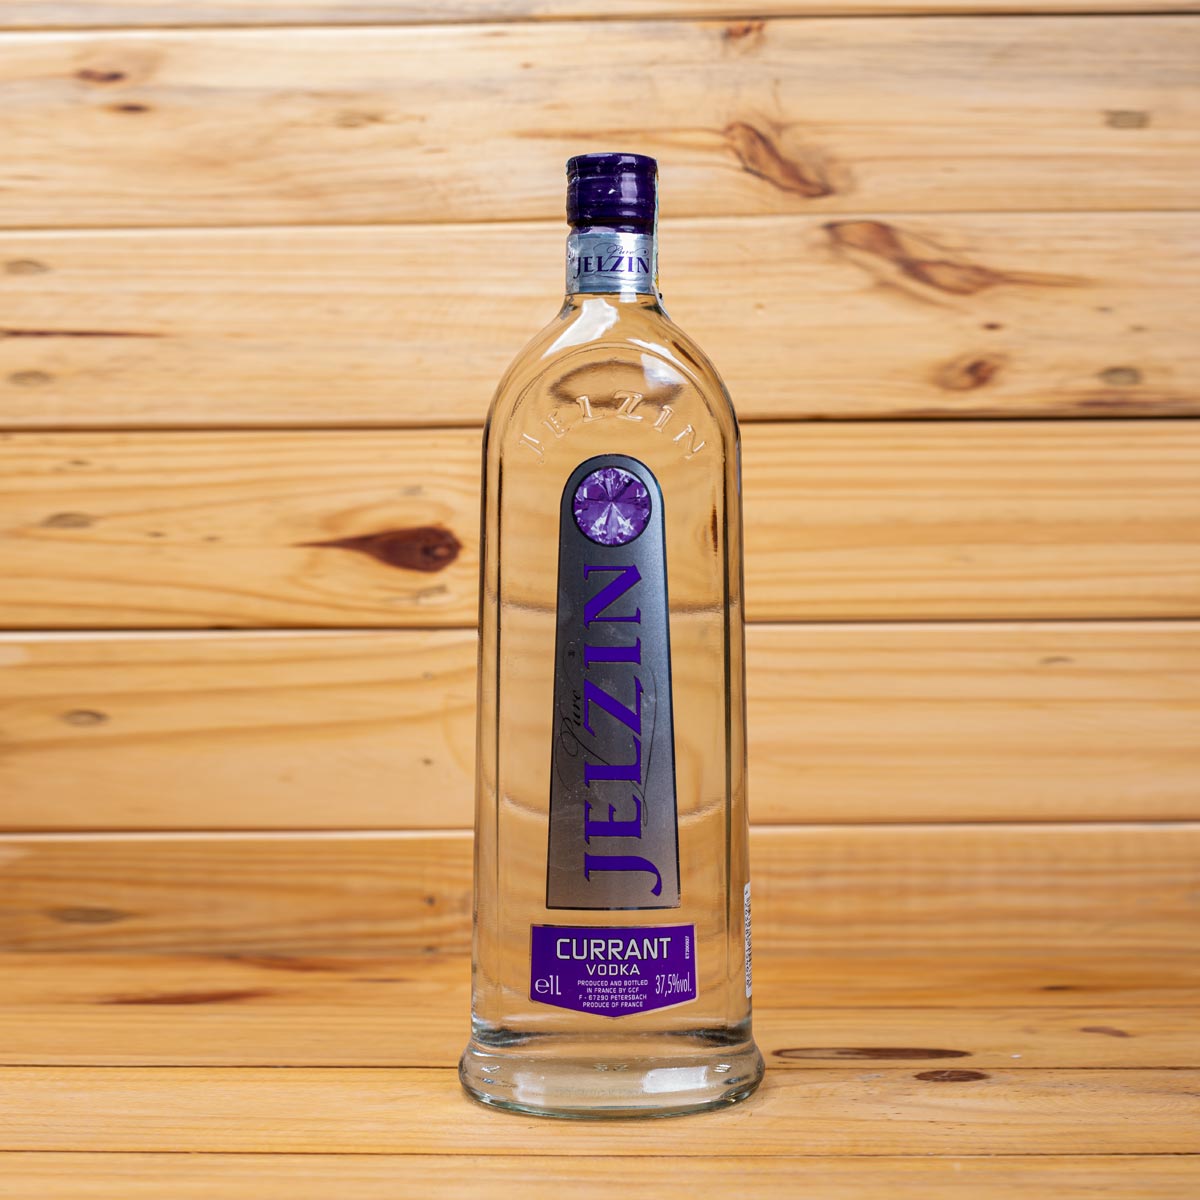 Rượu Vodka Pháp Jelzin 1000ml nhập khẩu giá rẻ